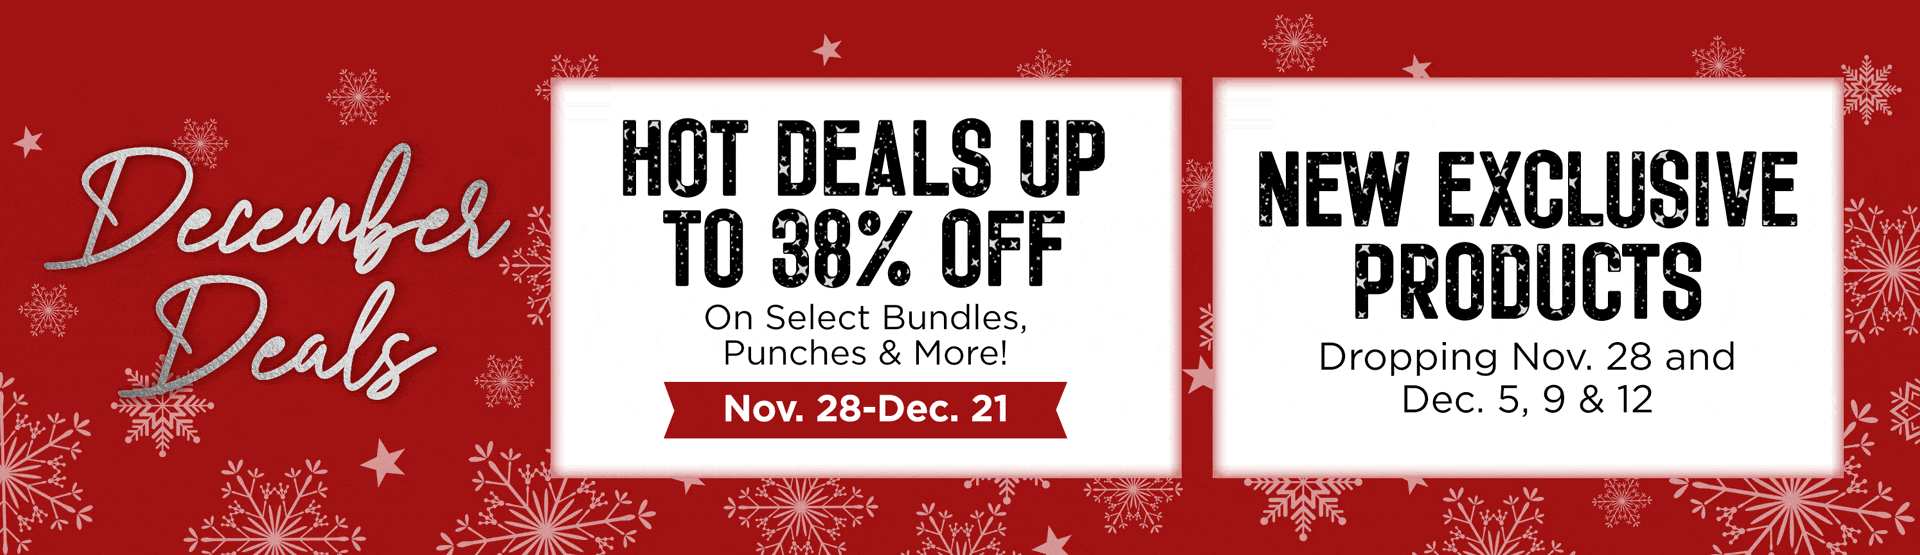 December Deals Promo